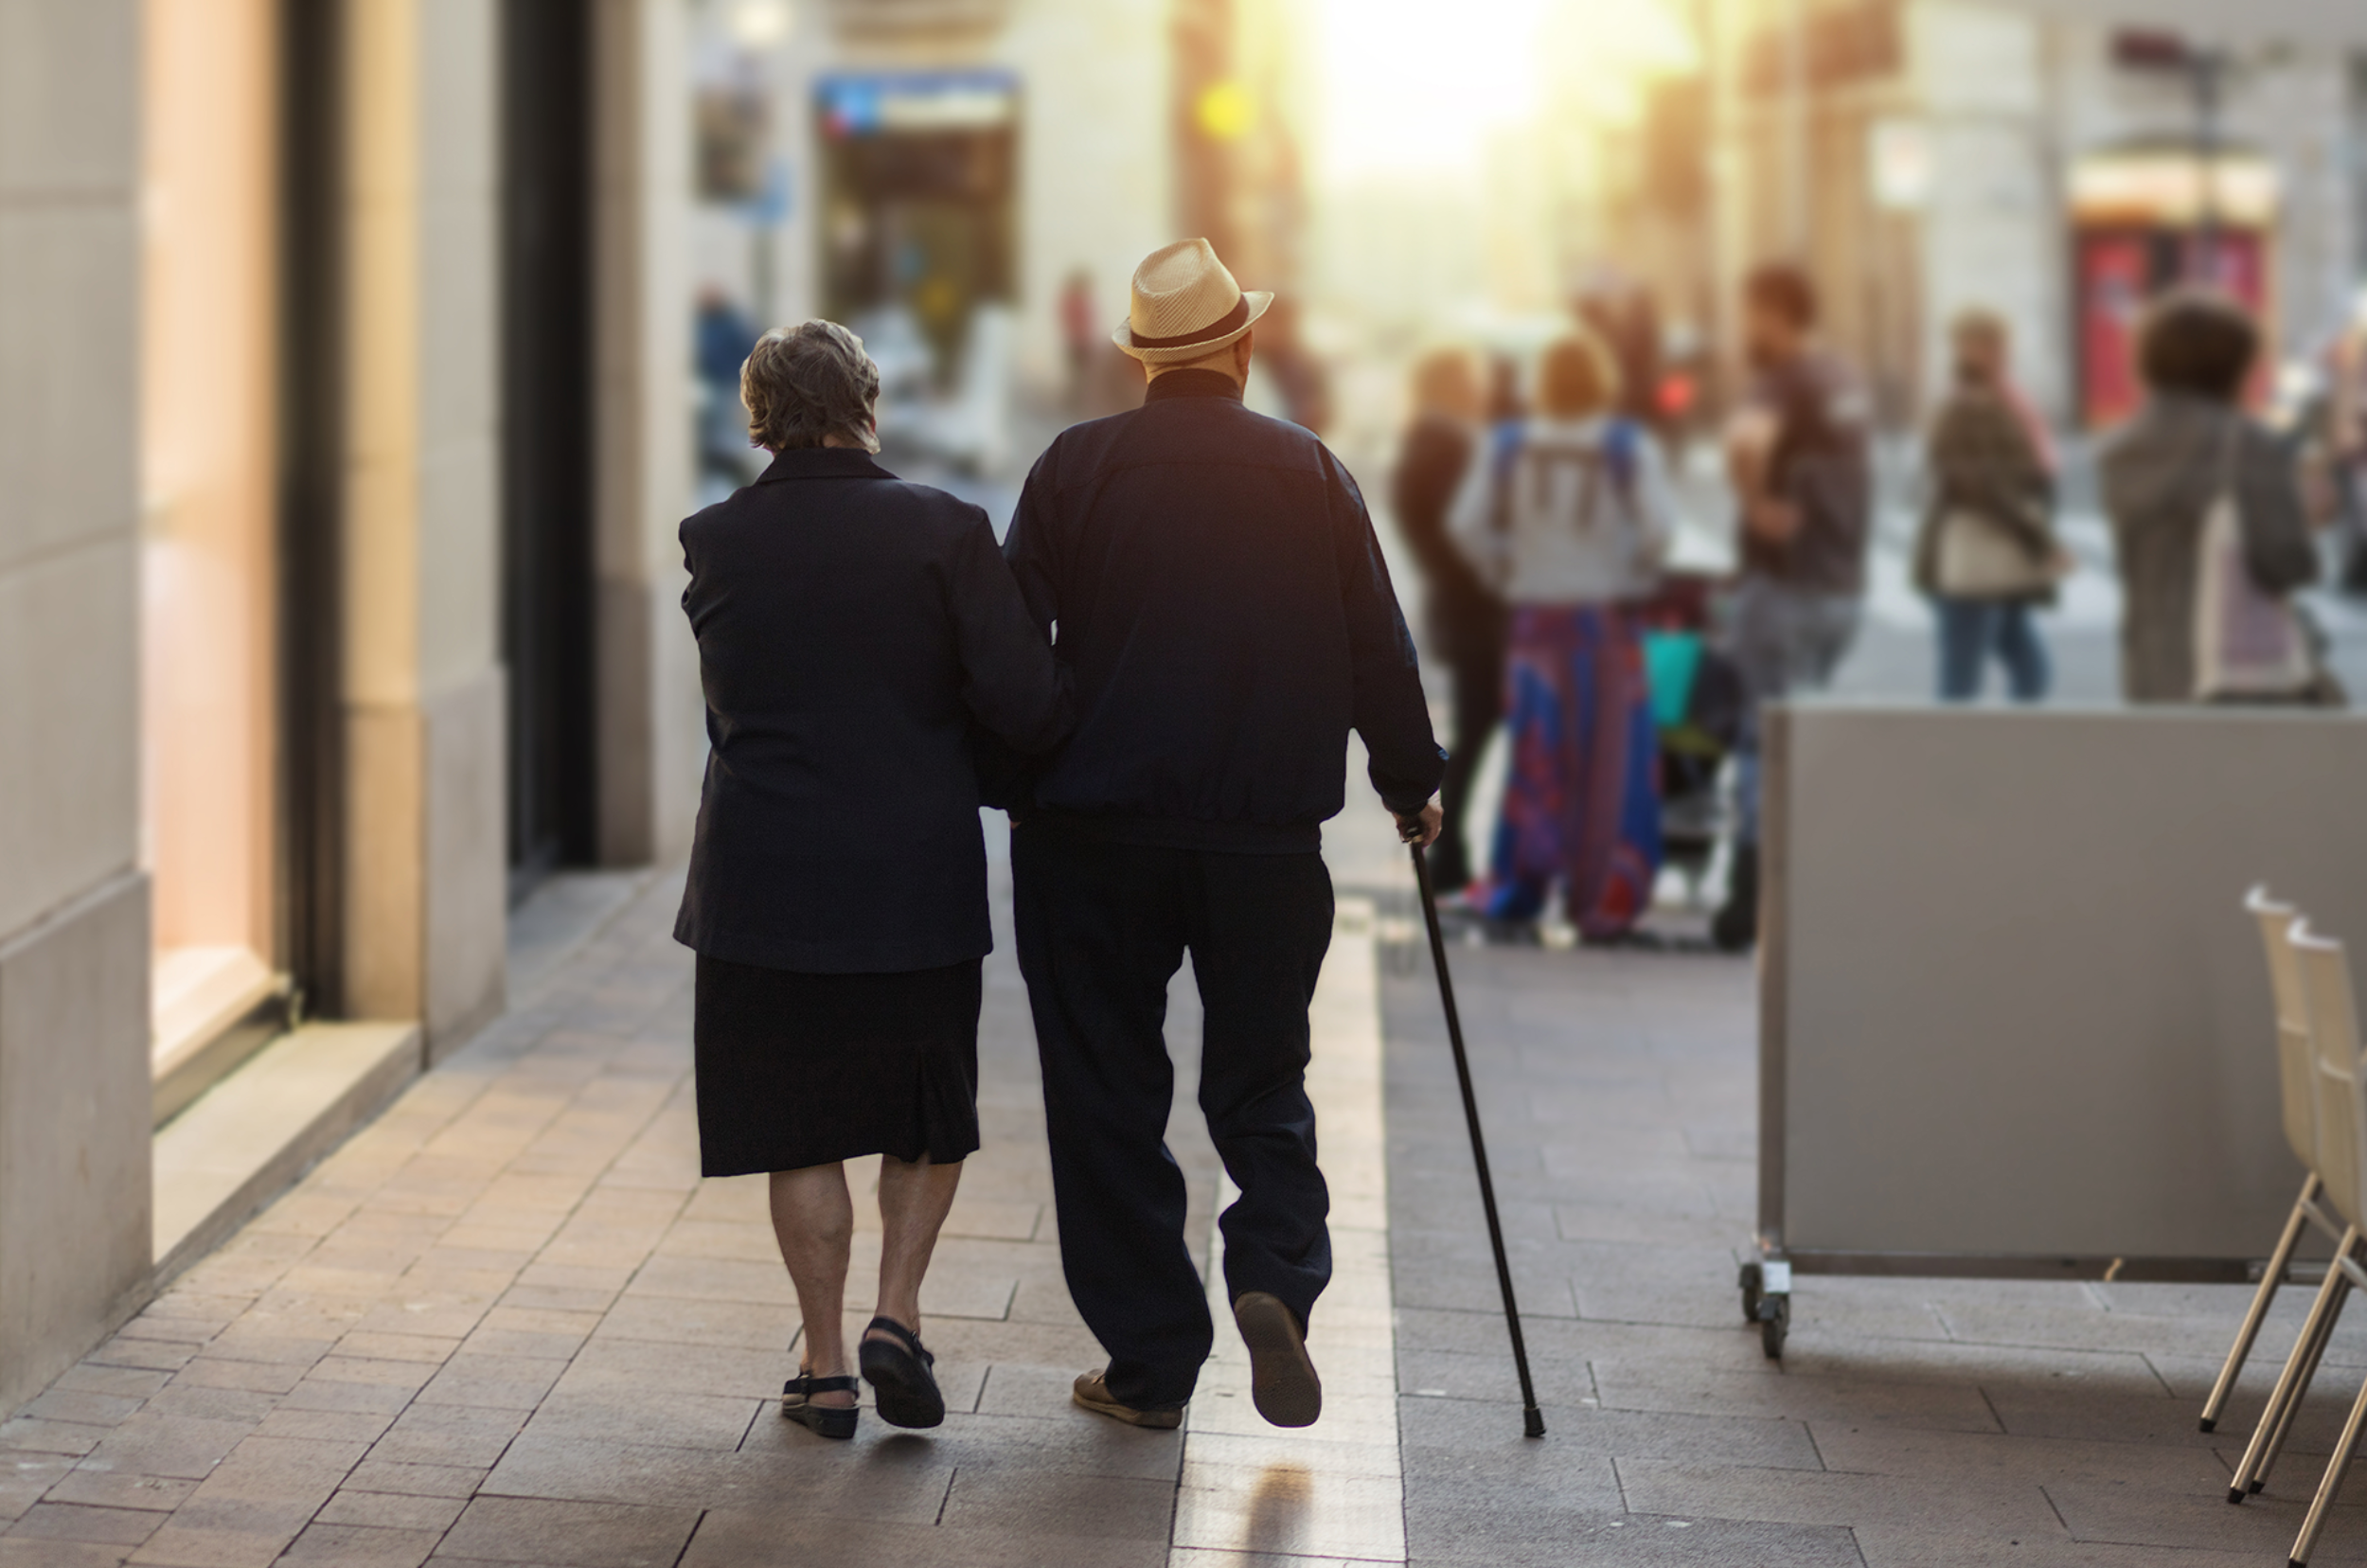 An elderly couple walking through the city.